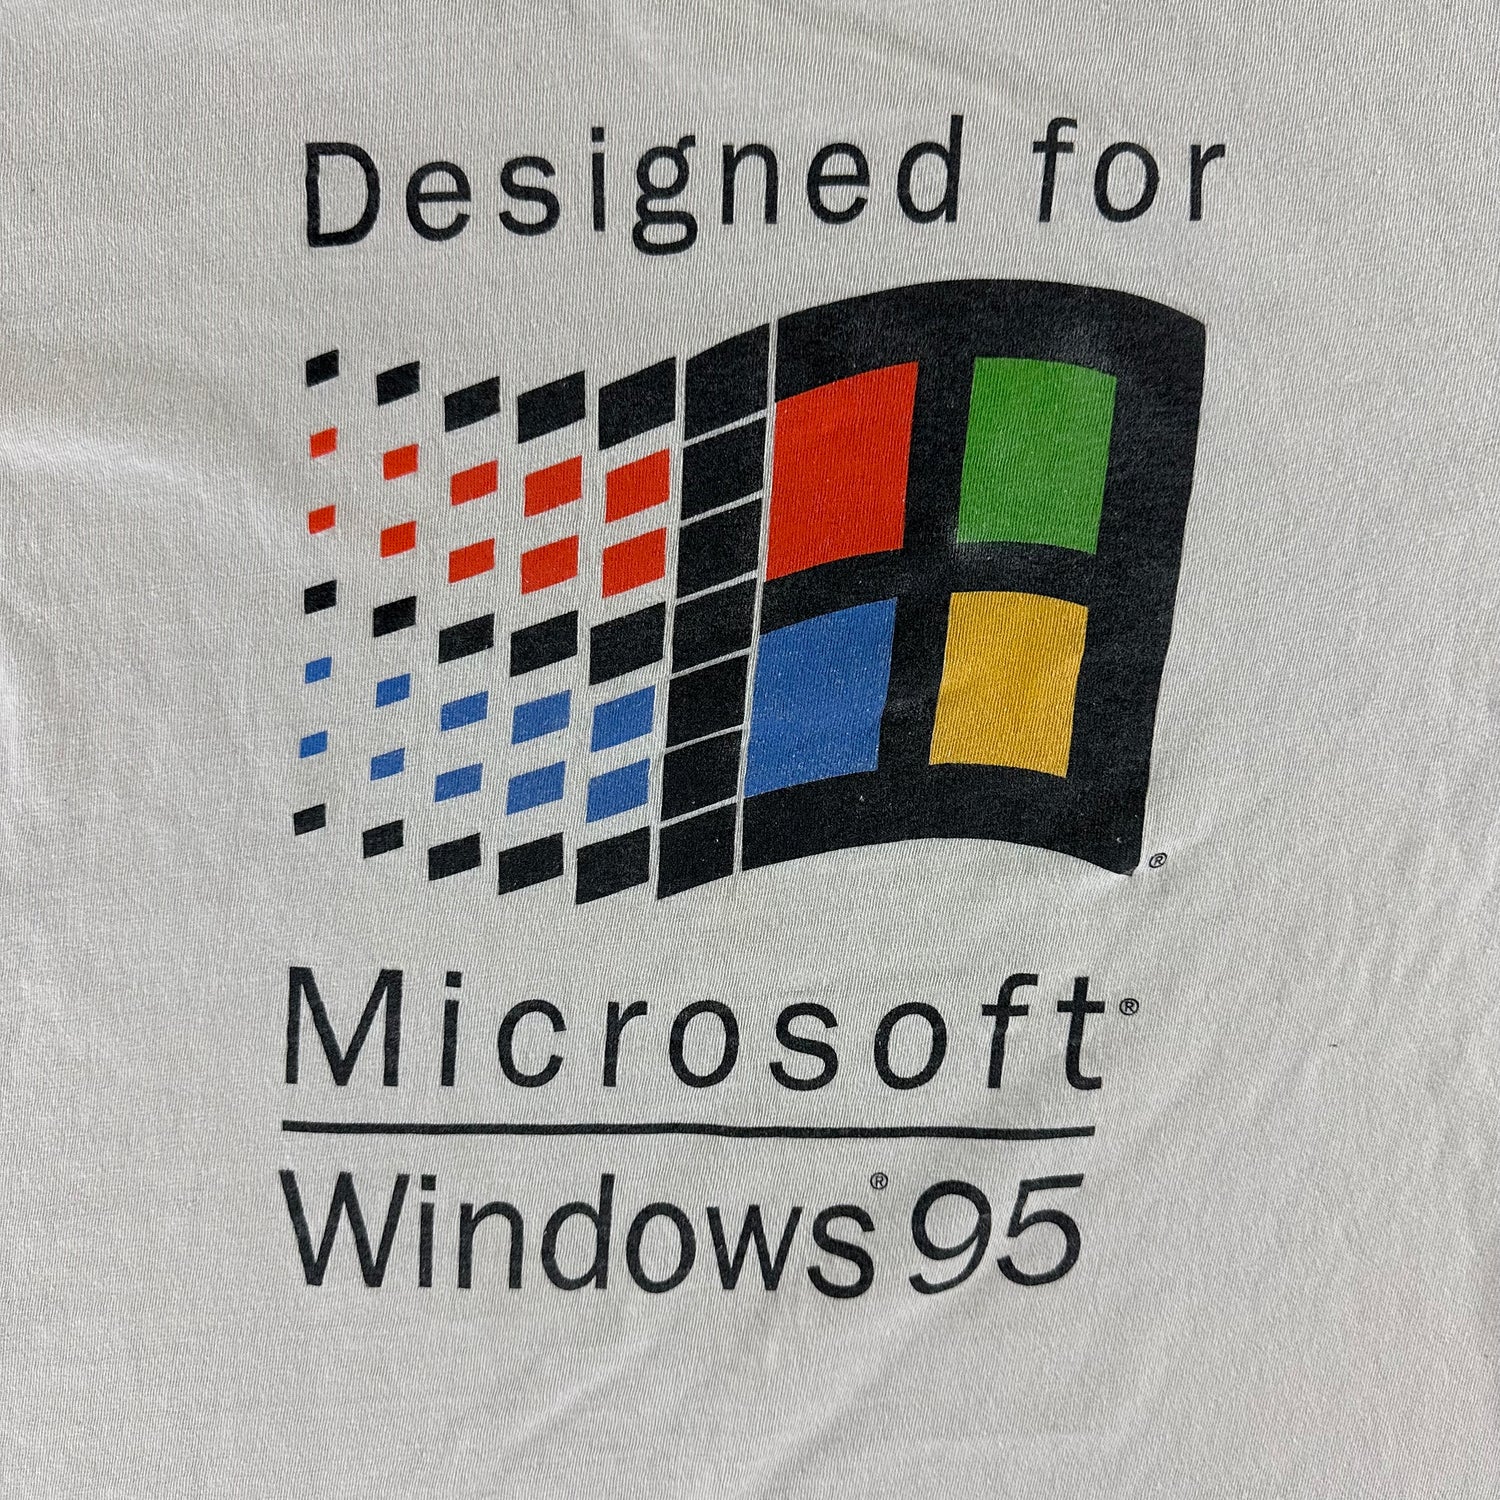 Vintage 1995 Microsoft T-shirt size Large